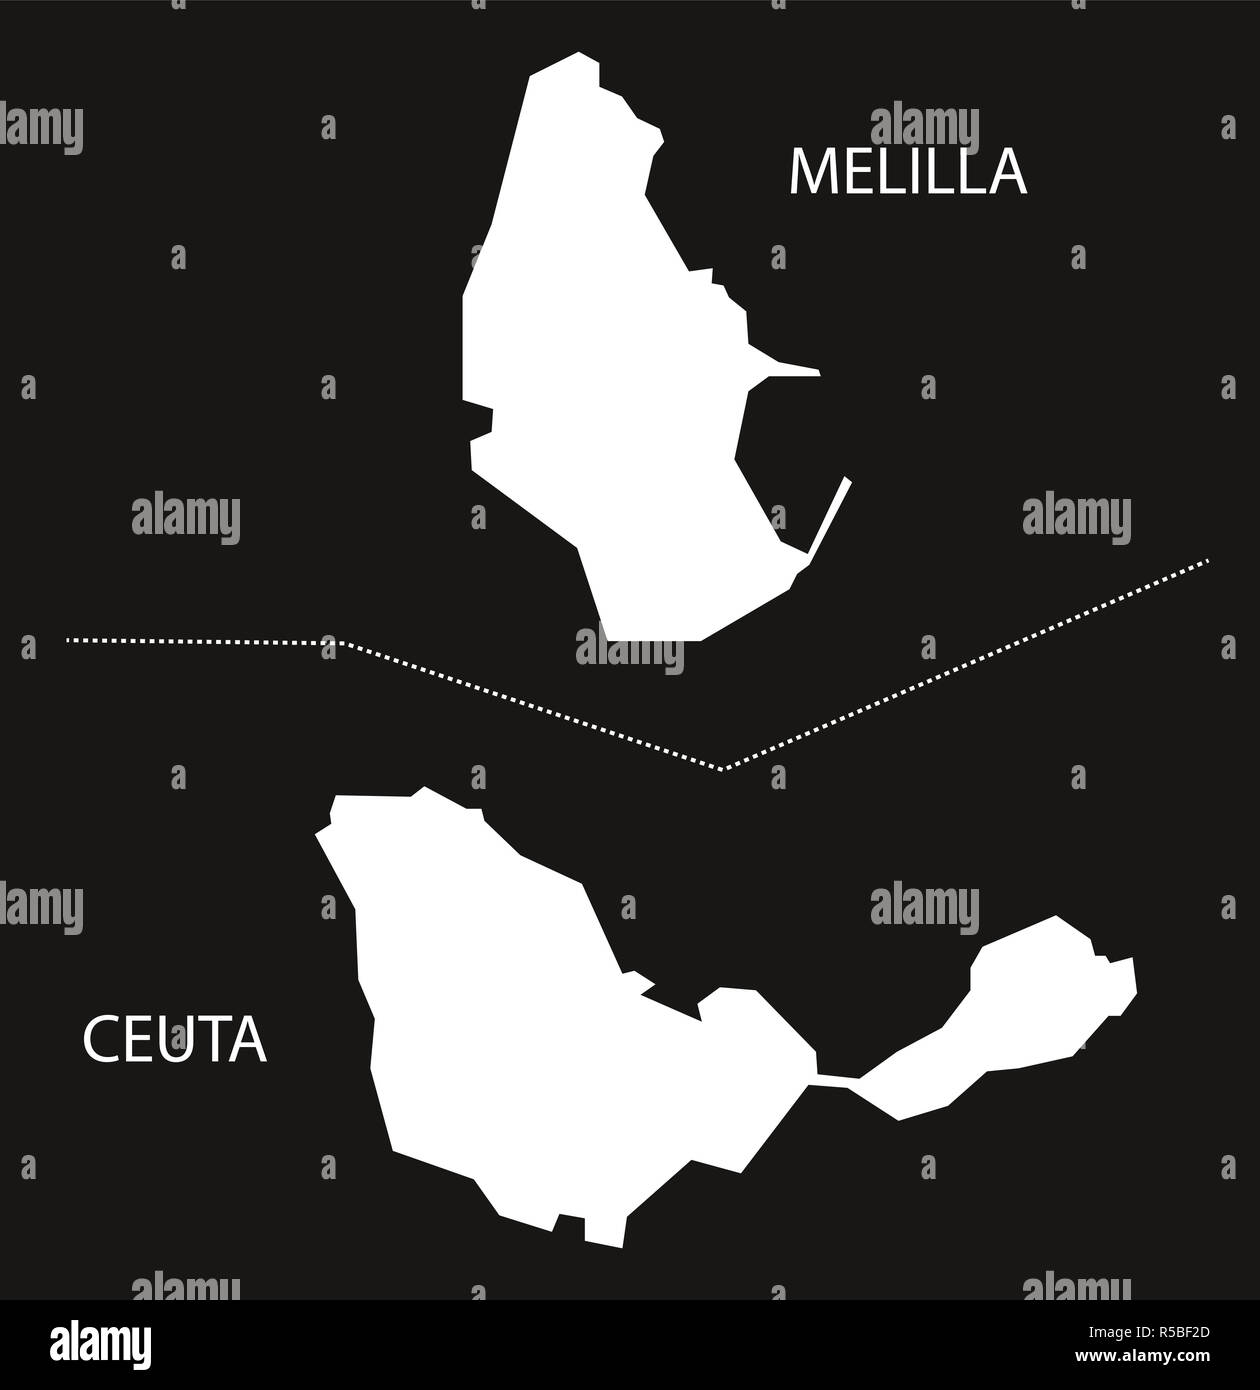 Melilla and Ceuta Spain map black inverted silhouette illustration Stock Photo